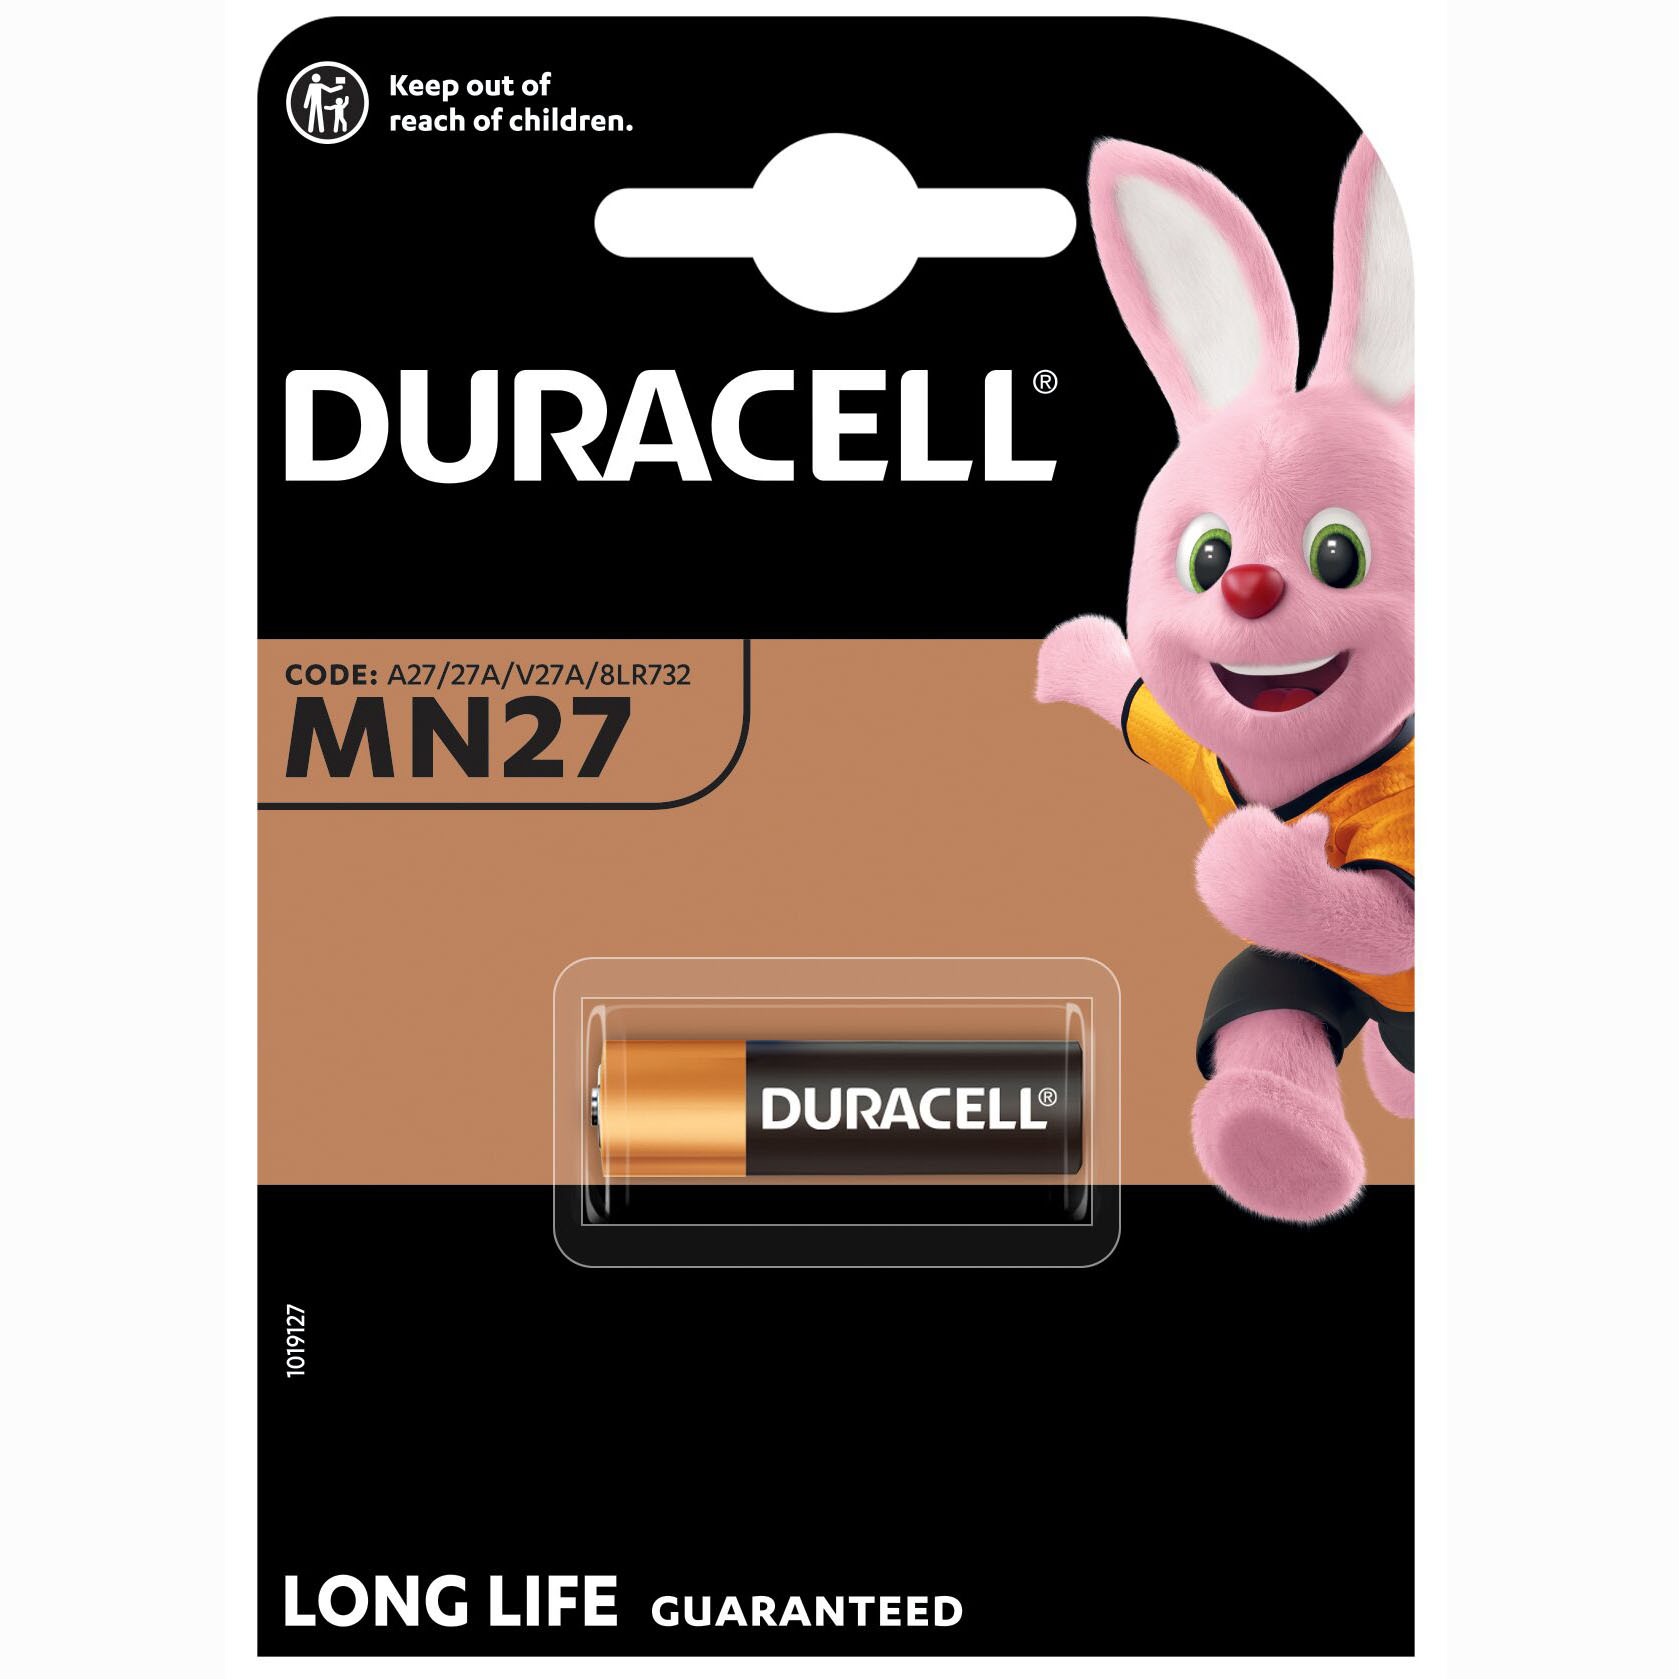 Специализированная щелочная батарейка Duracell 12V MN27 A27/27A/V27A/8LR732 (706029) - фото 2